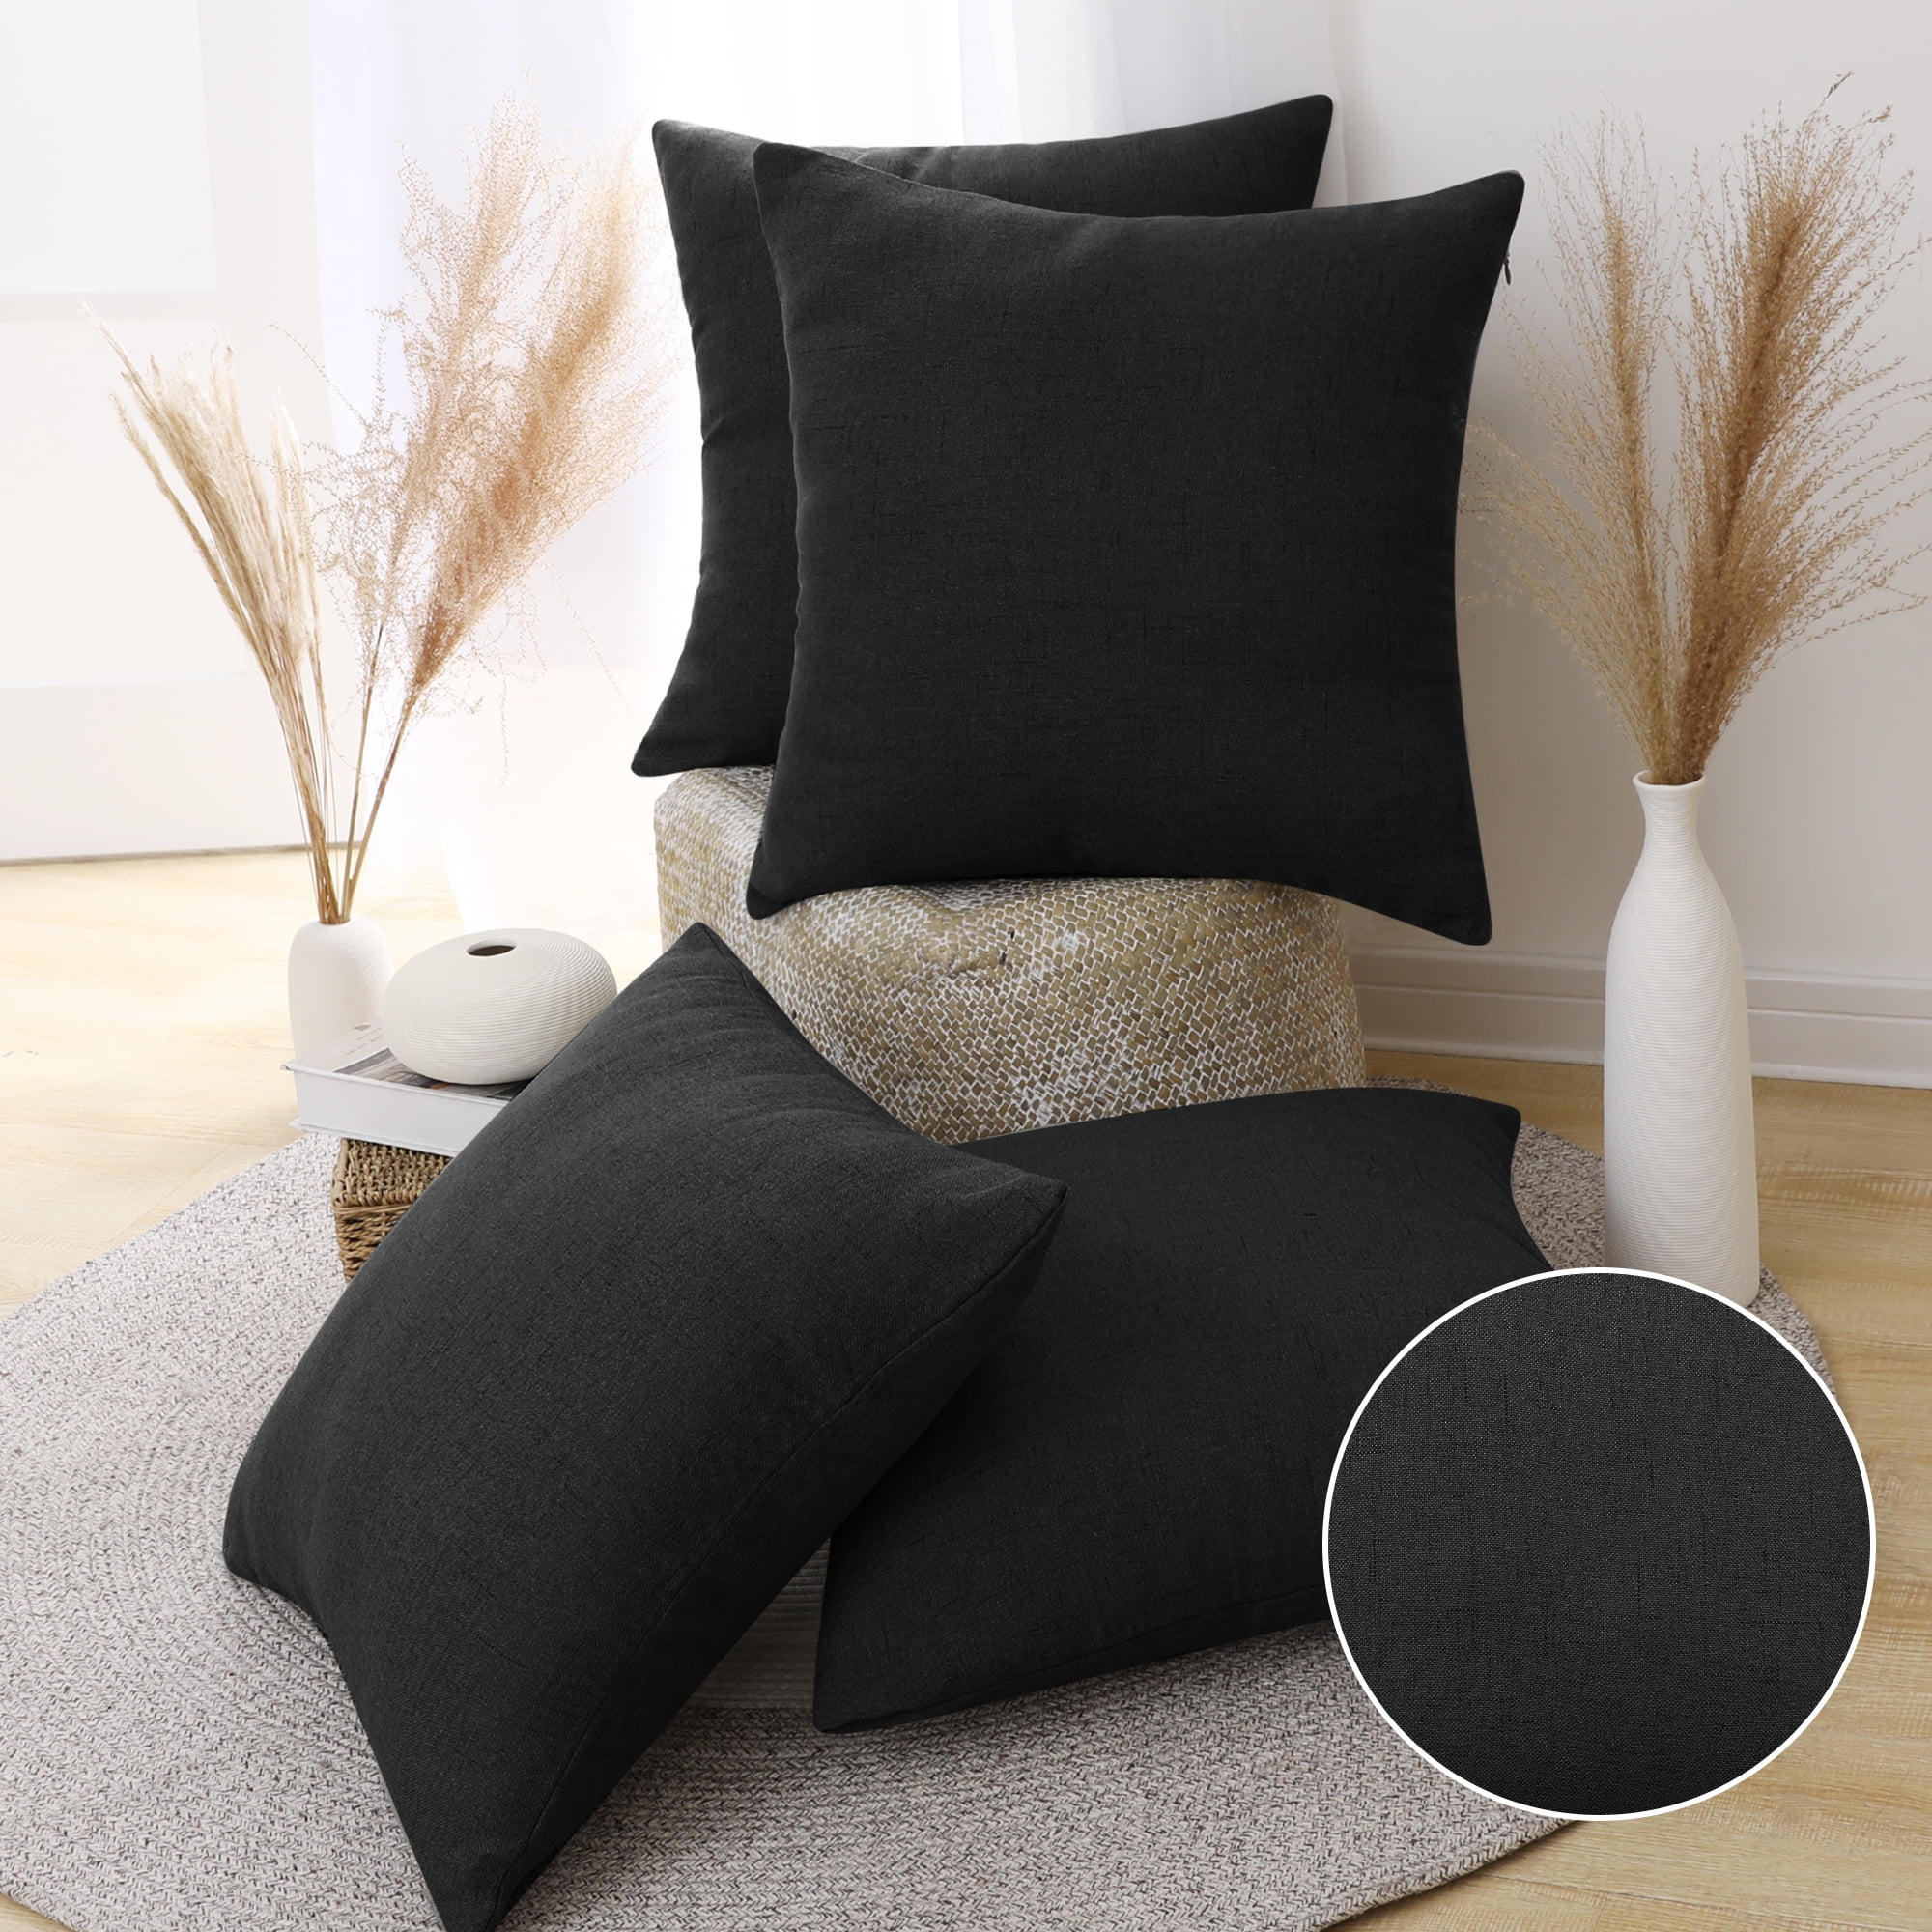 Throw Pillow Case Sofa Home Decor Cotton Cushion Cover Christmas Decorative16x16 